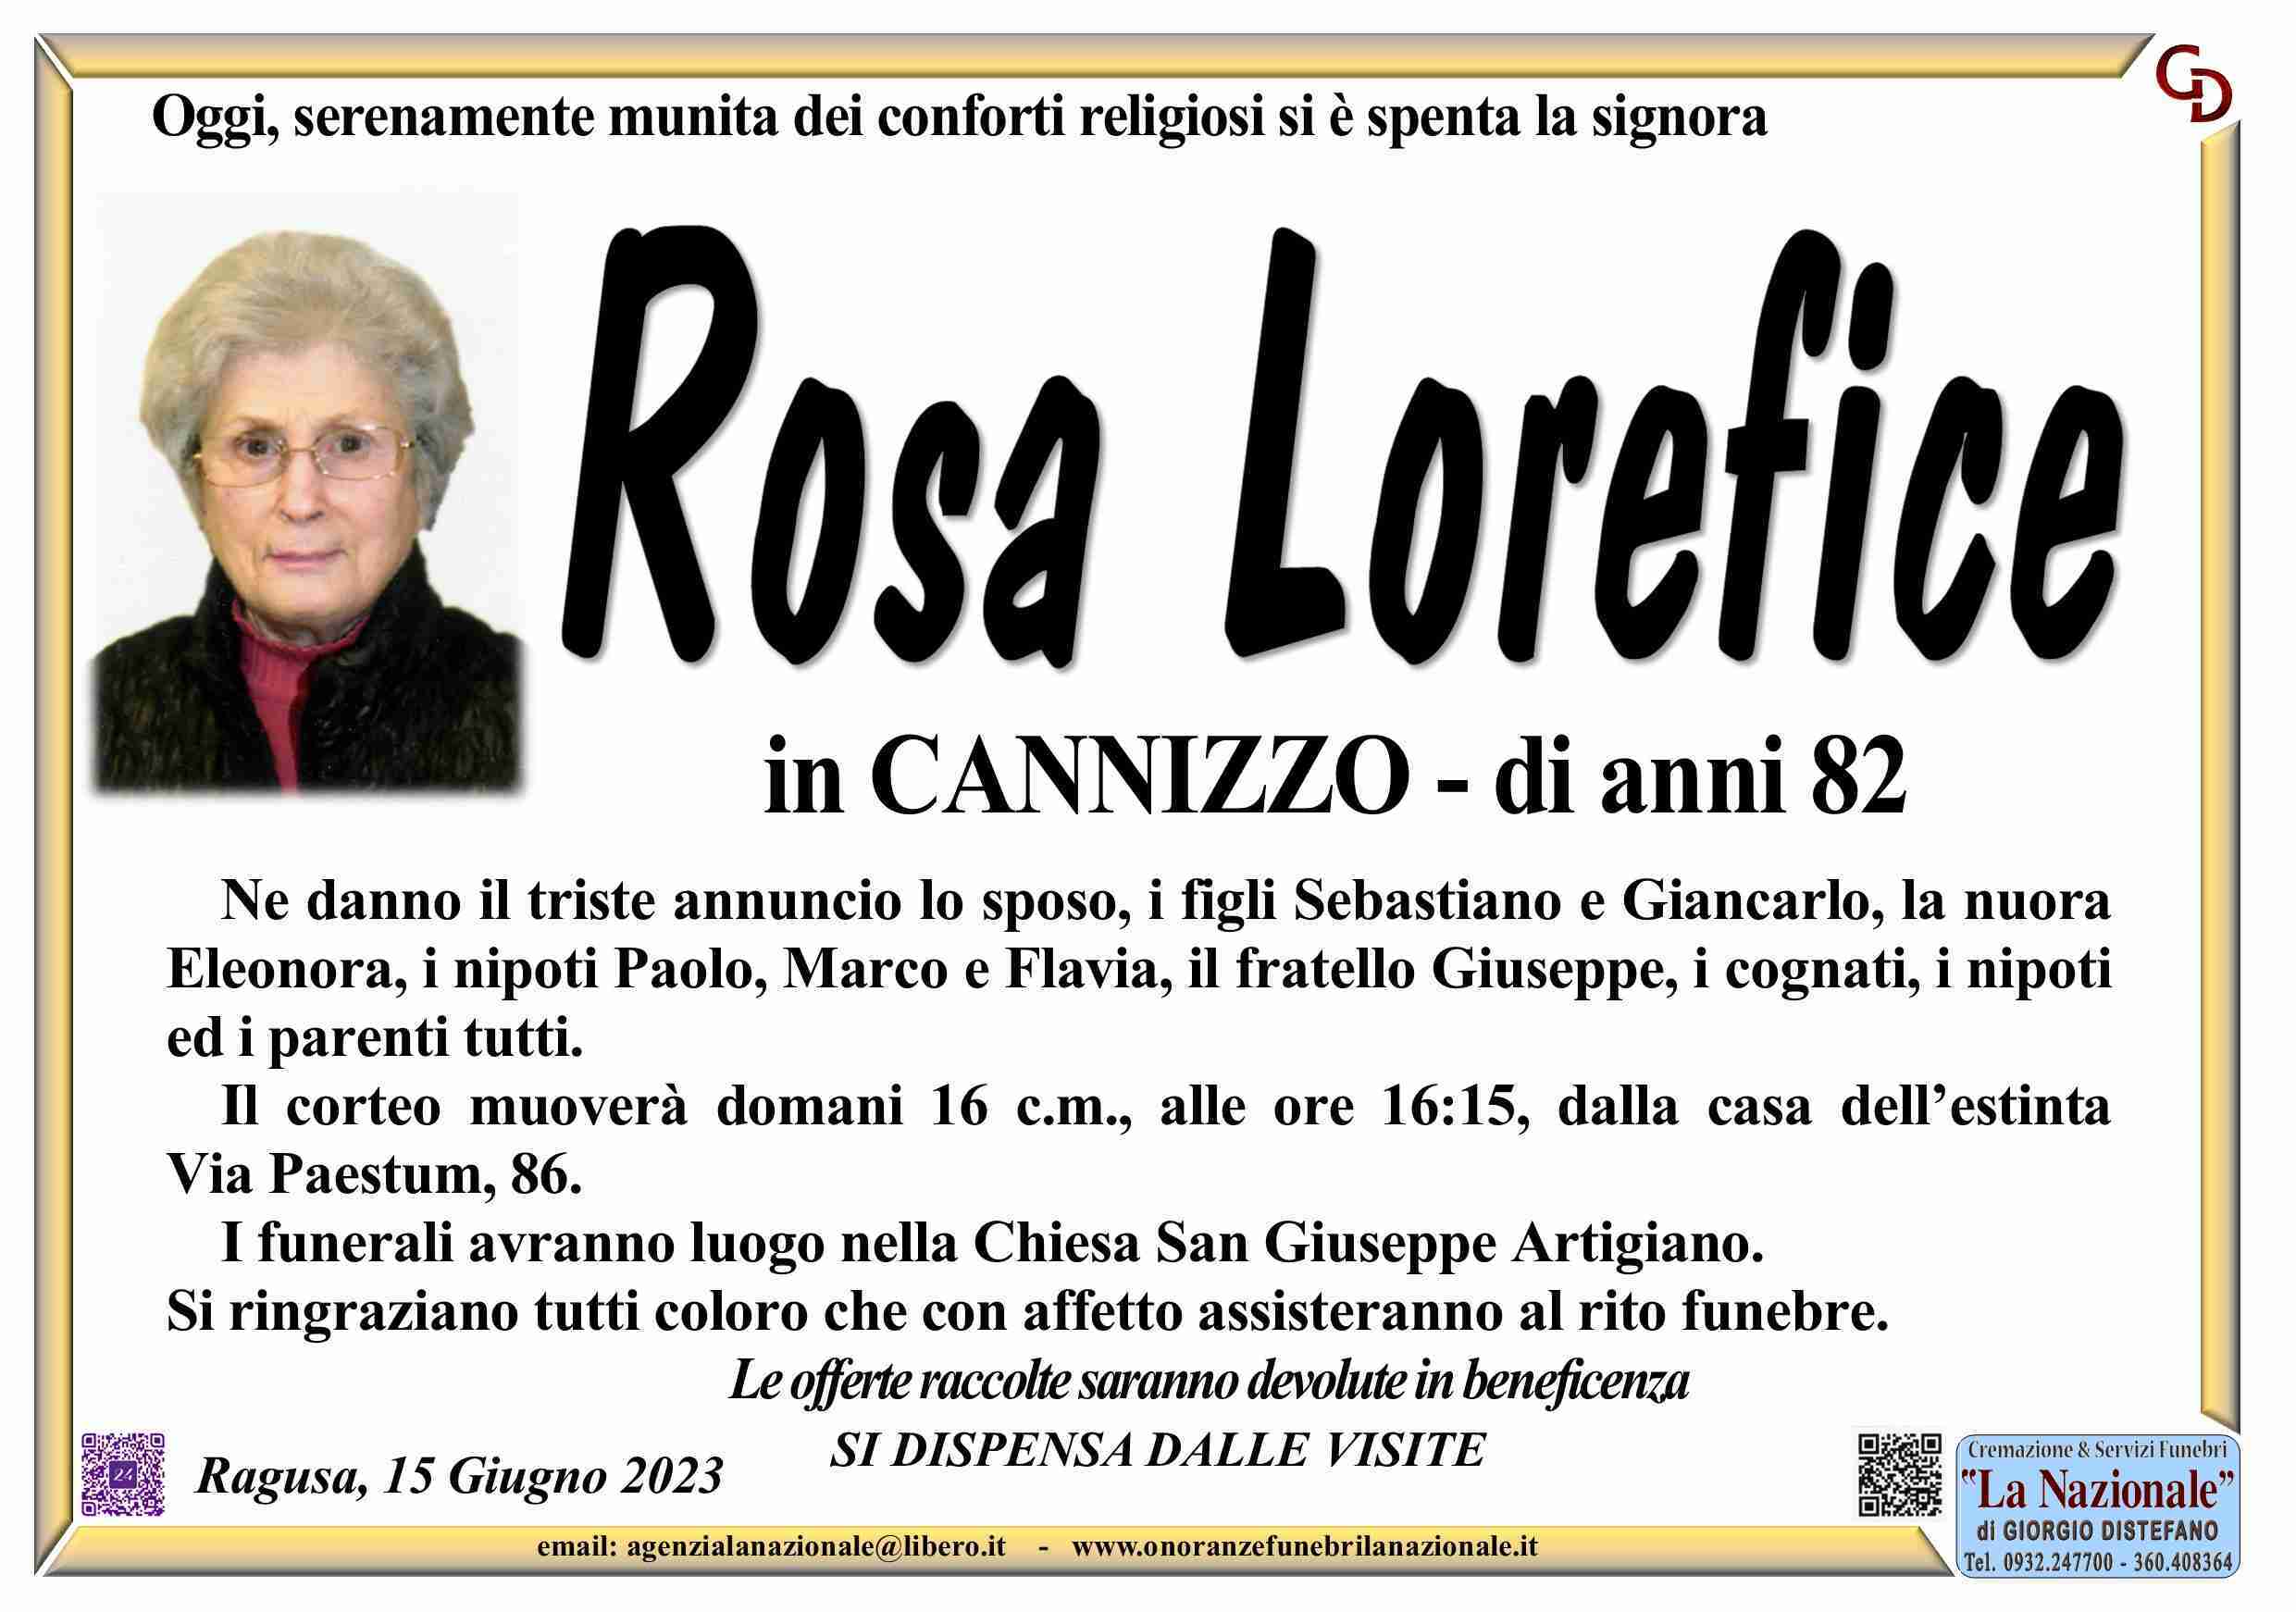 Rosa Lorefice